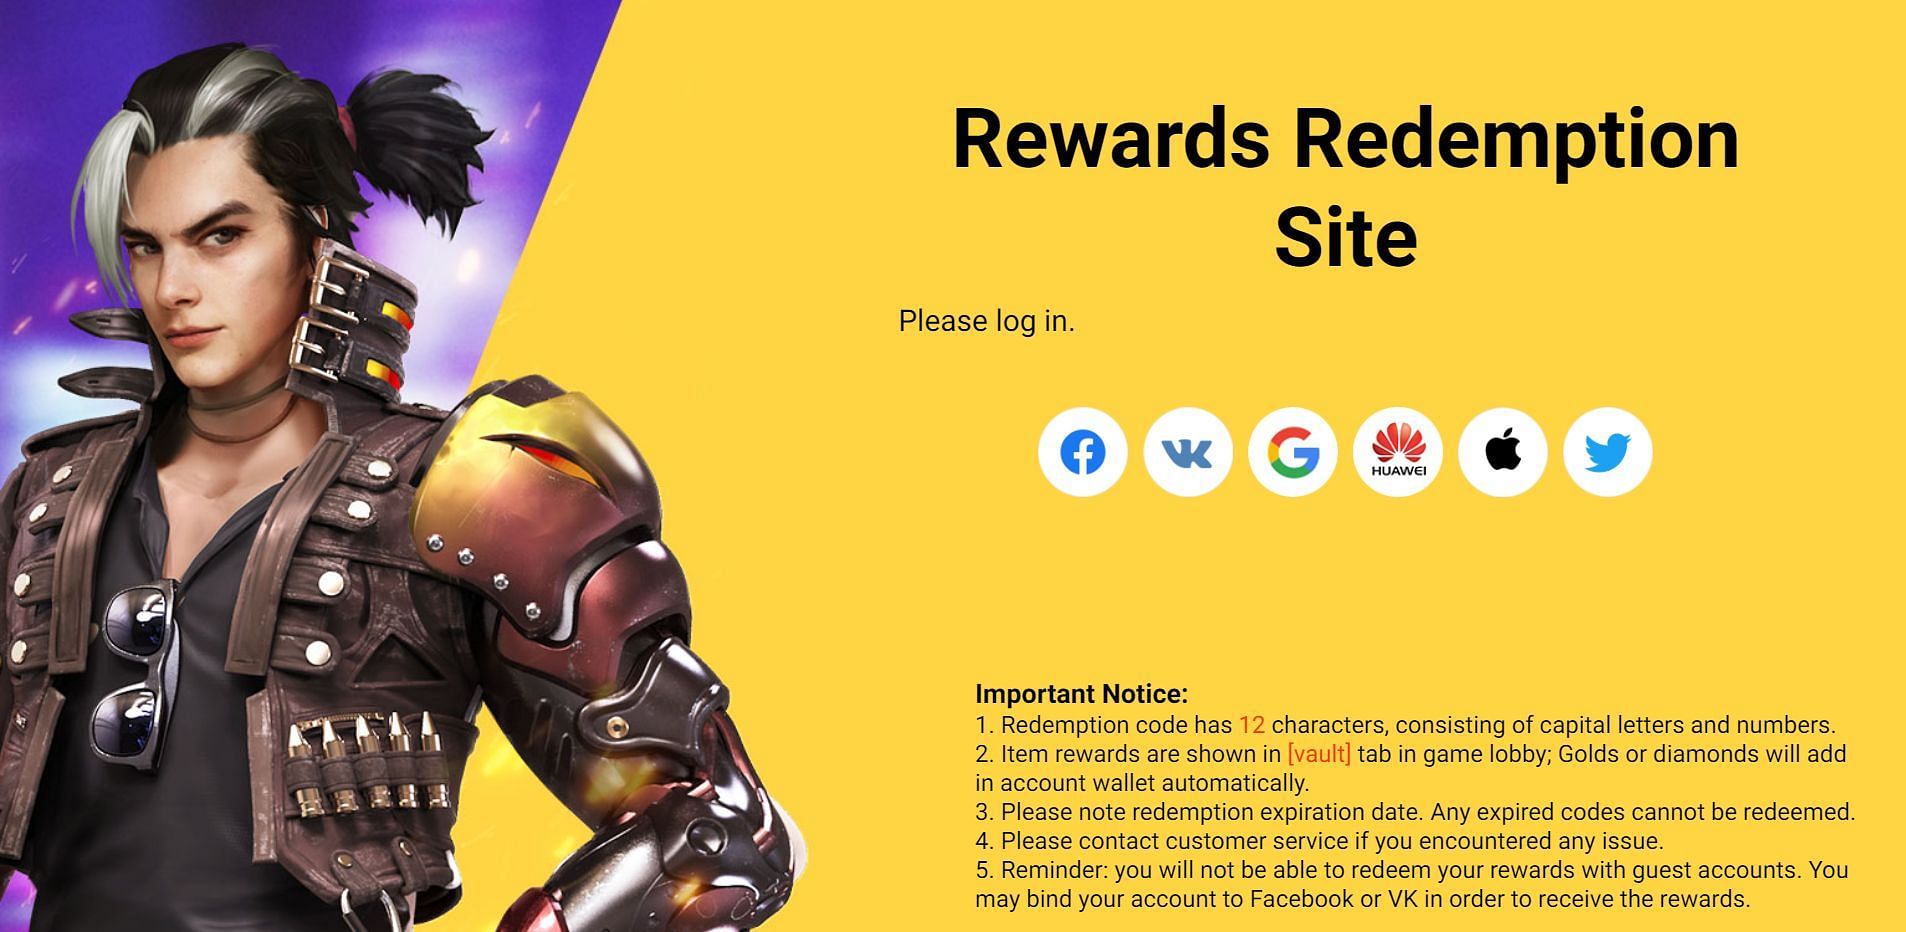 The Rewards Redemption Site offers multiple login options (Image via Garena)